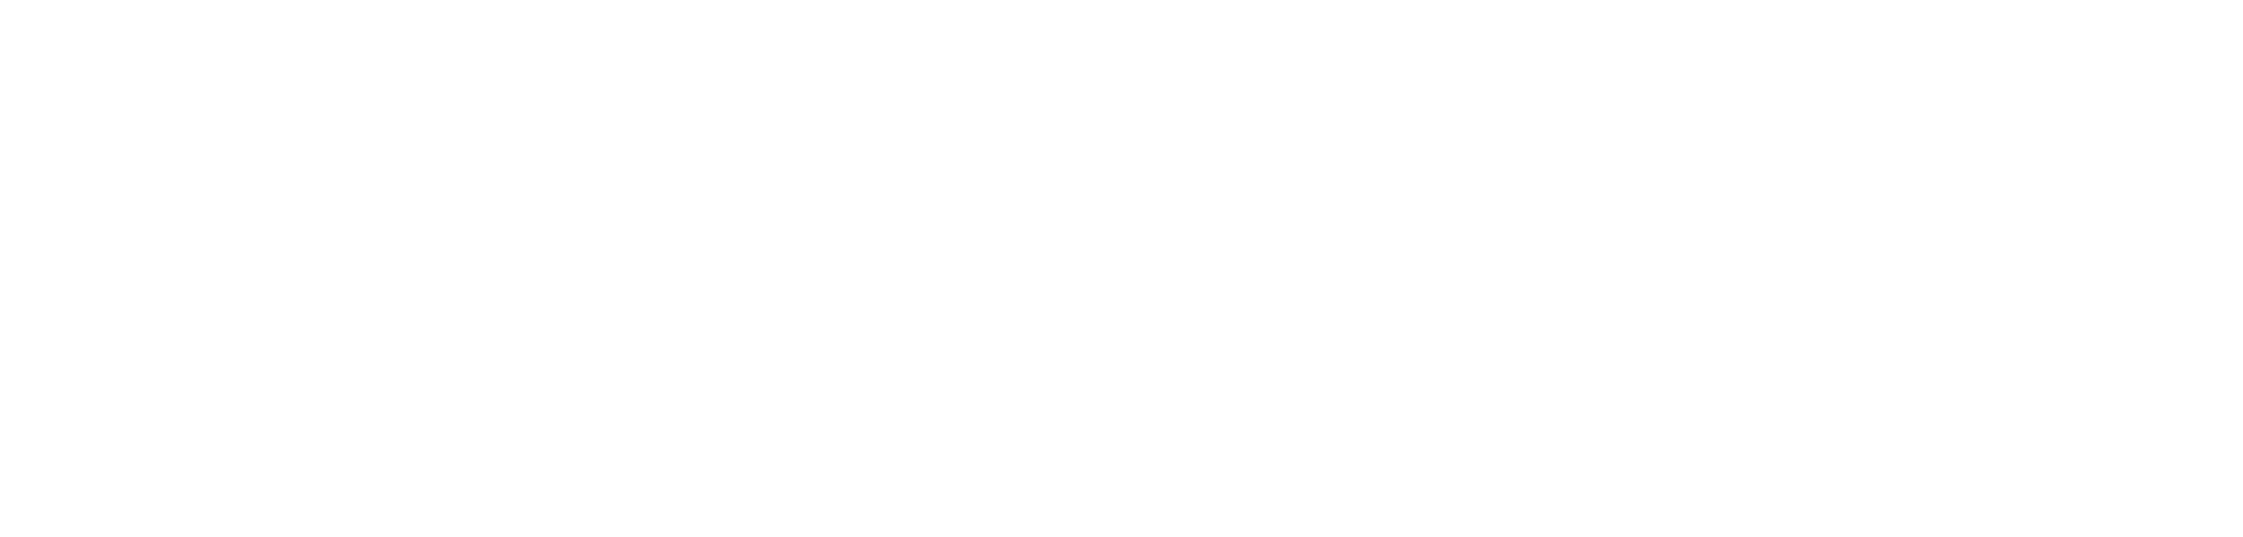 Mapware_Logo_WHITE-1